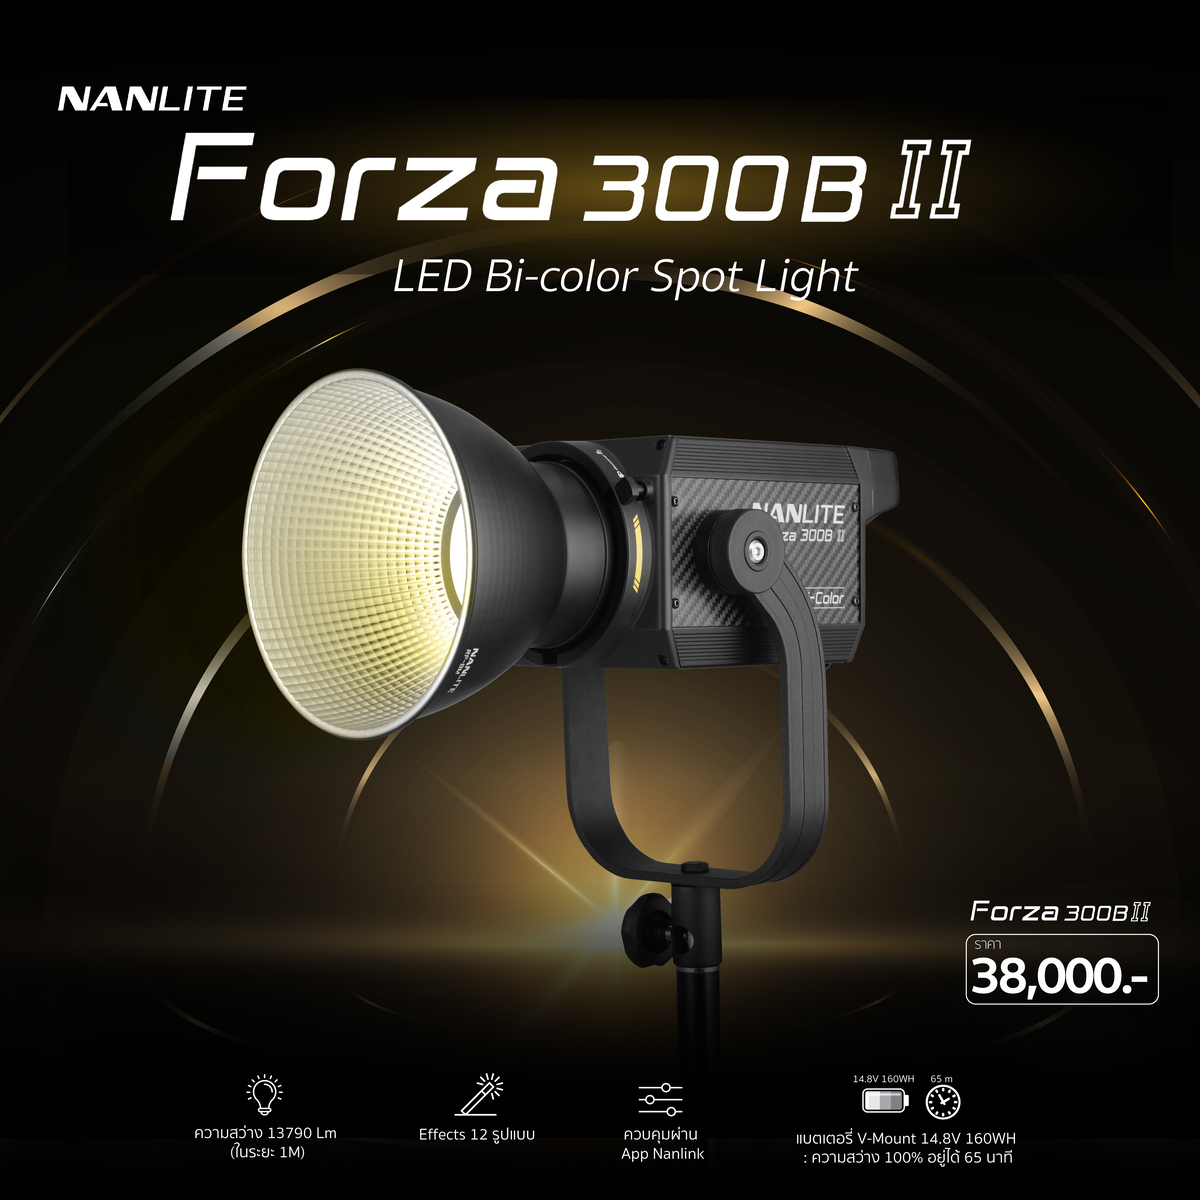 Forza 300B II LED Daylight Spot Light